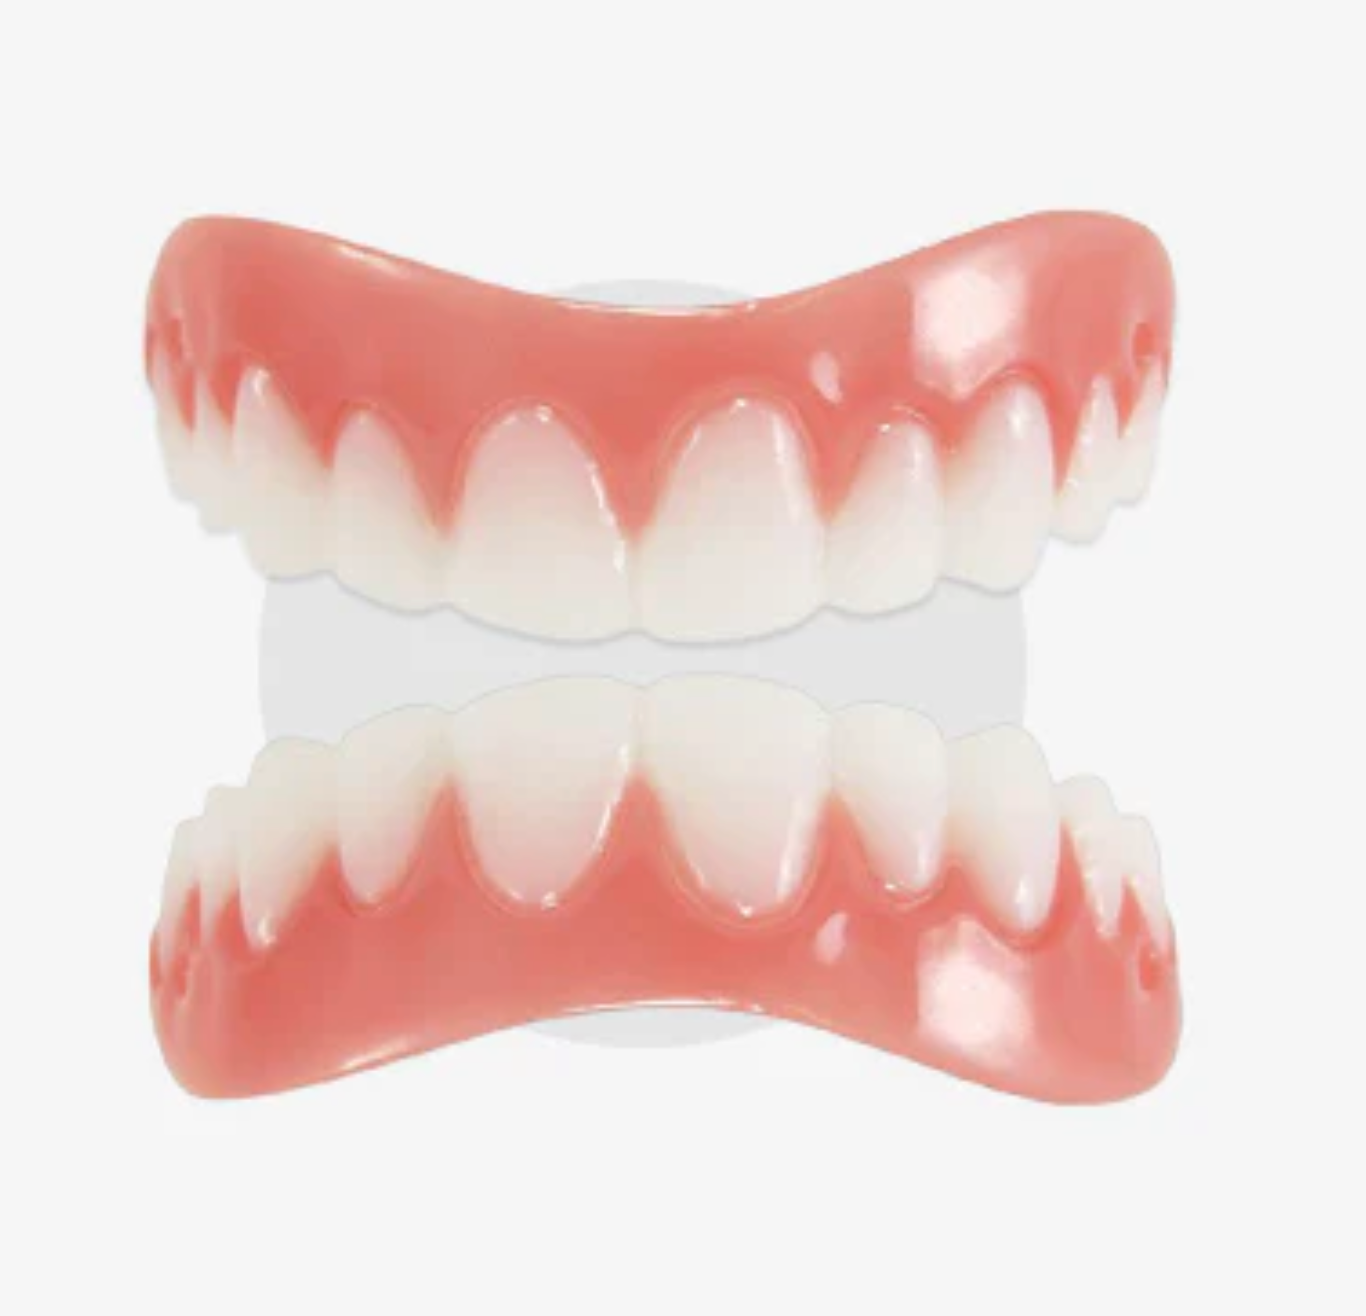 🔥 Last Day 60% OFF💕Adjustable Snap-On Dentures